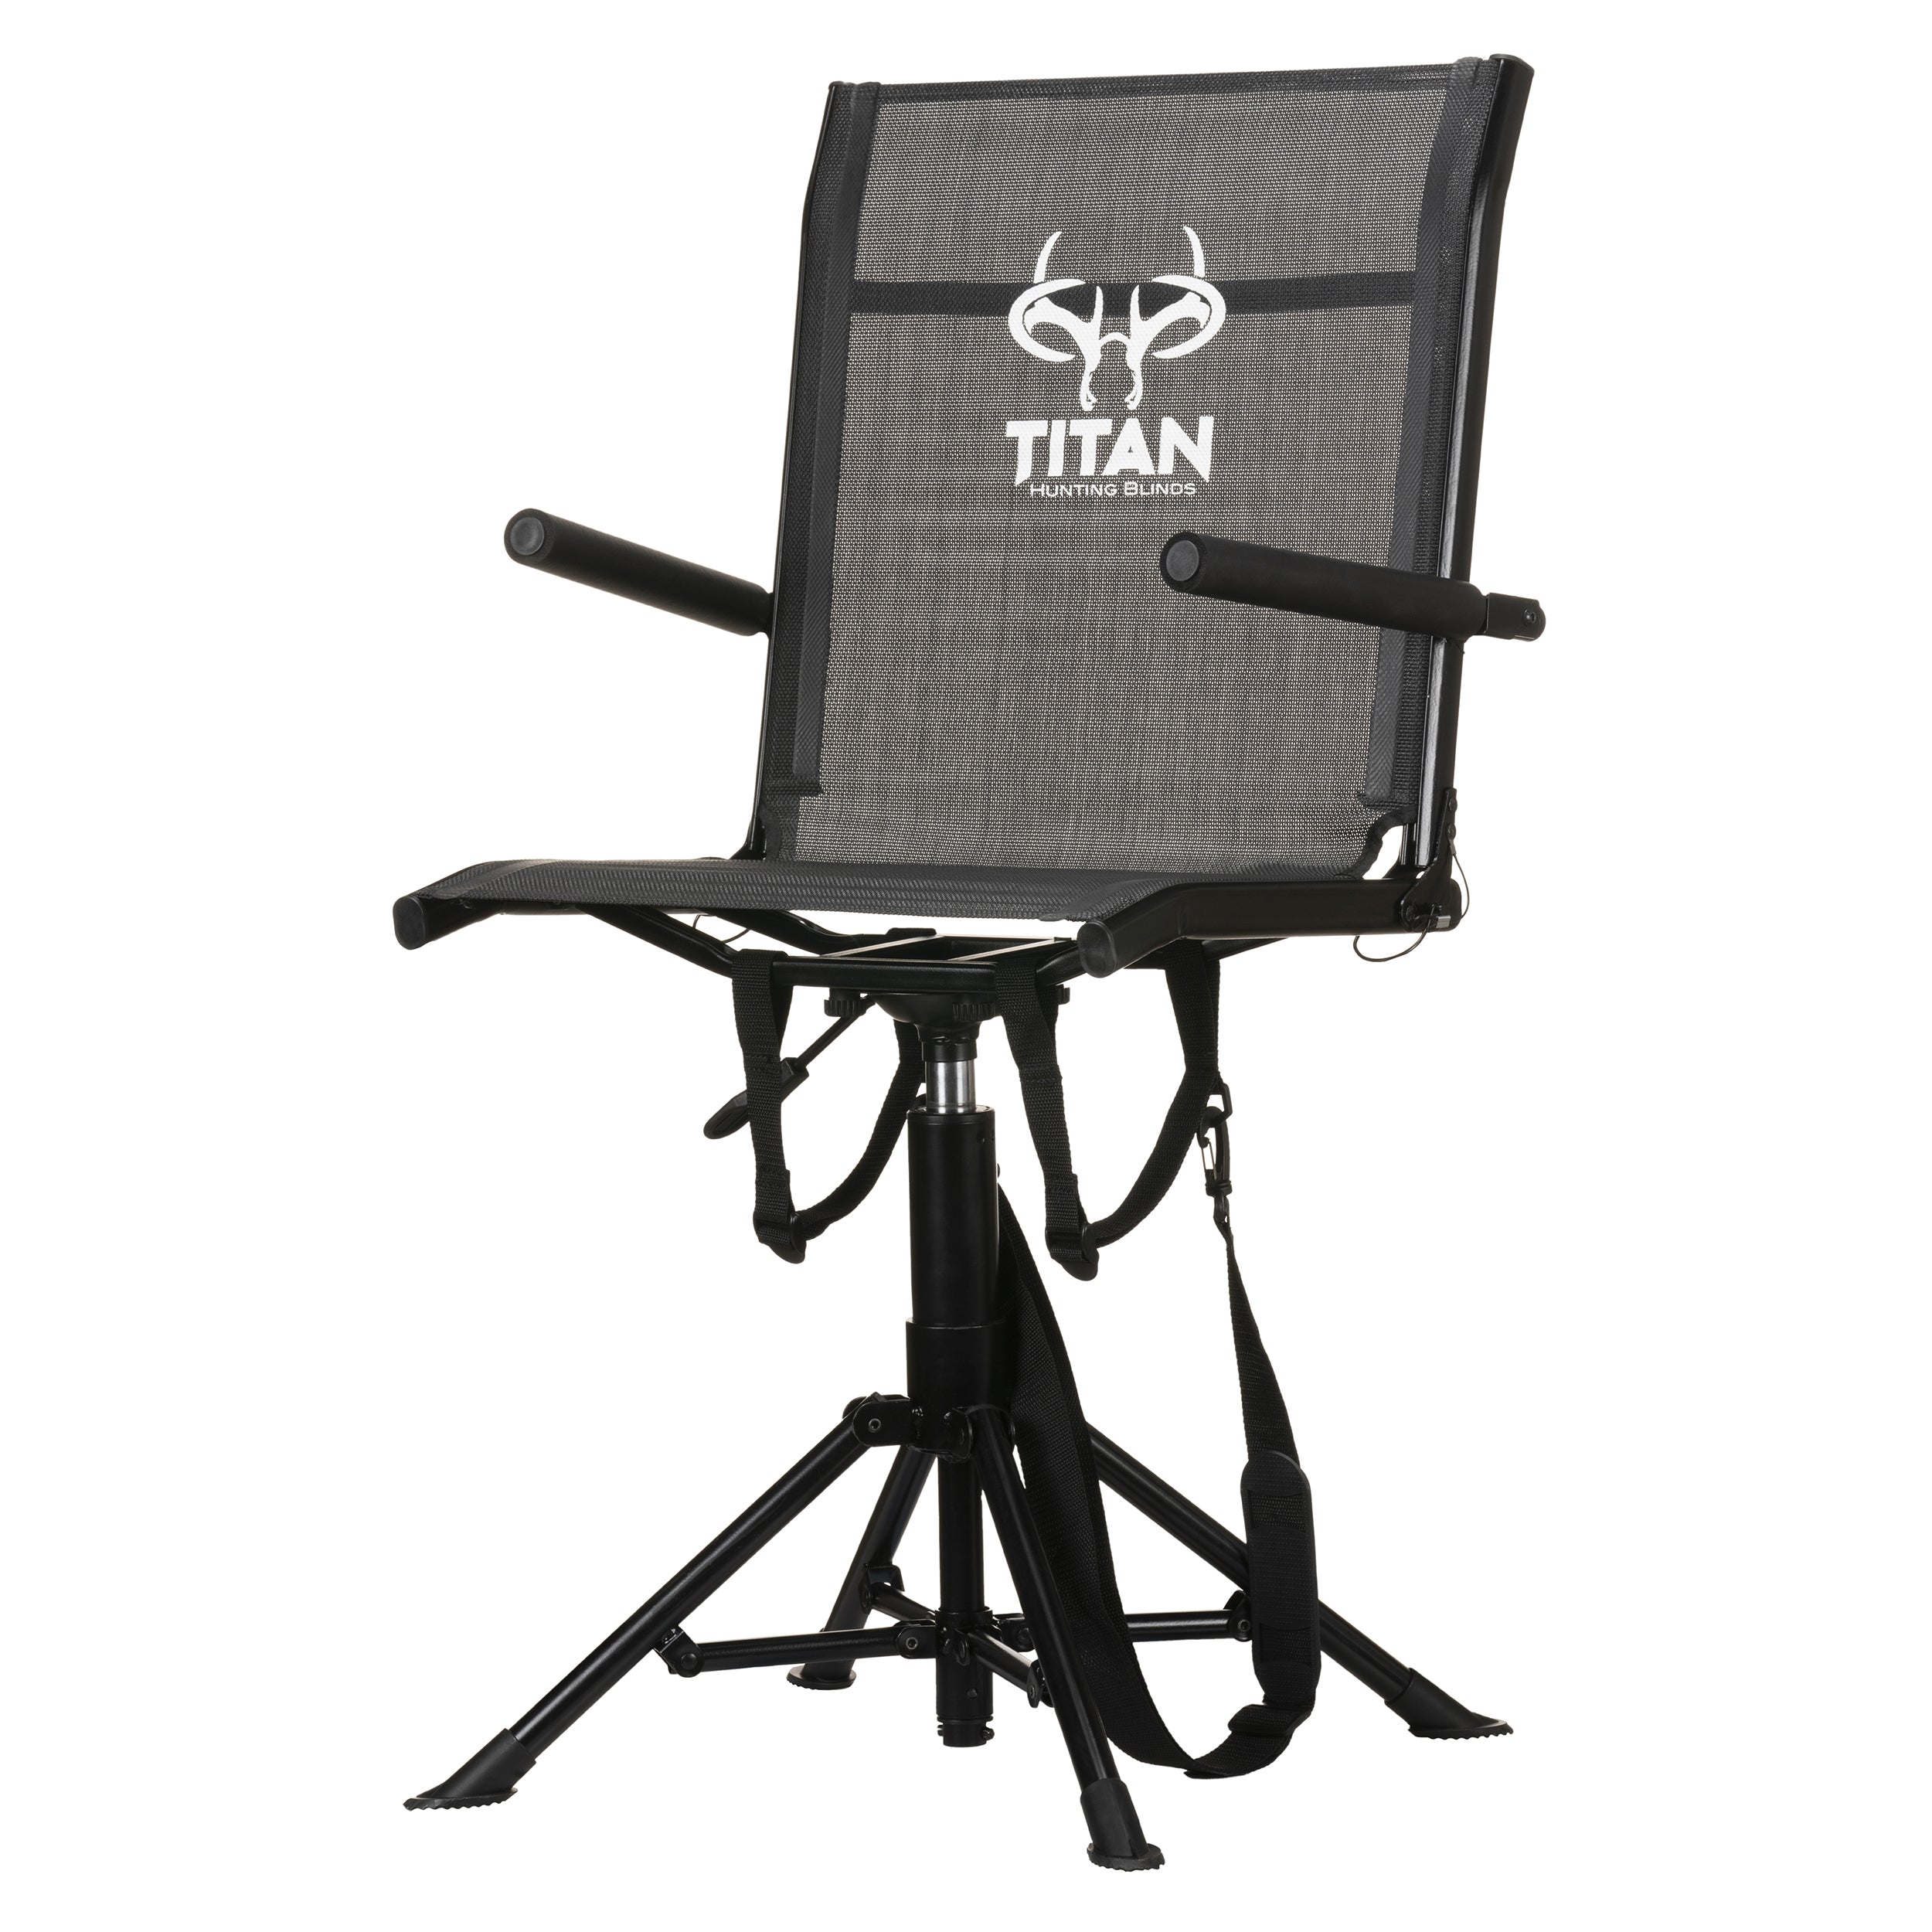 Game Winner Portable Blind Chair